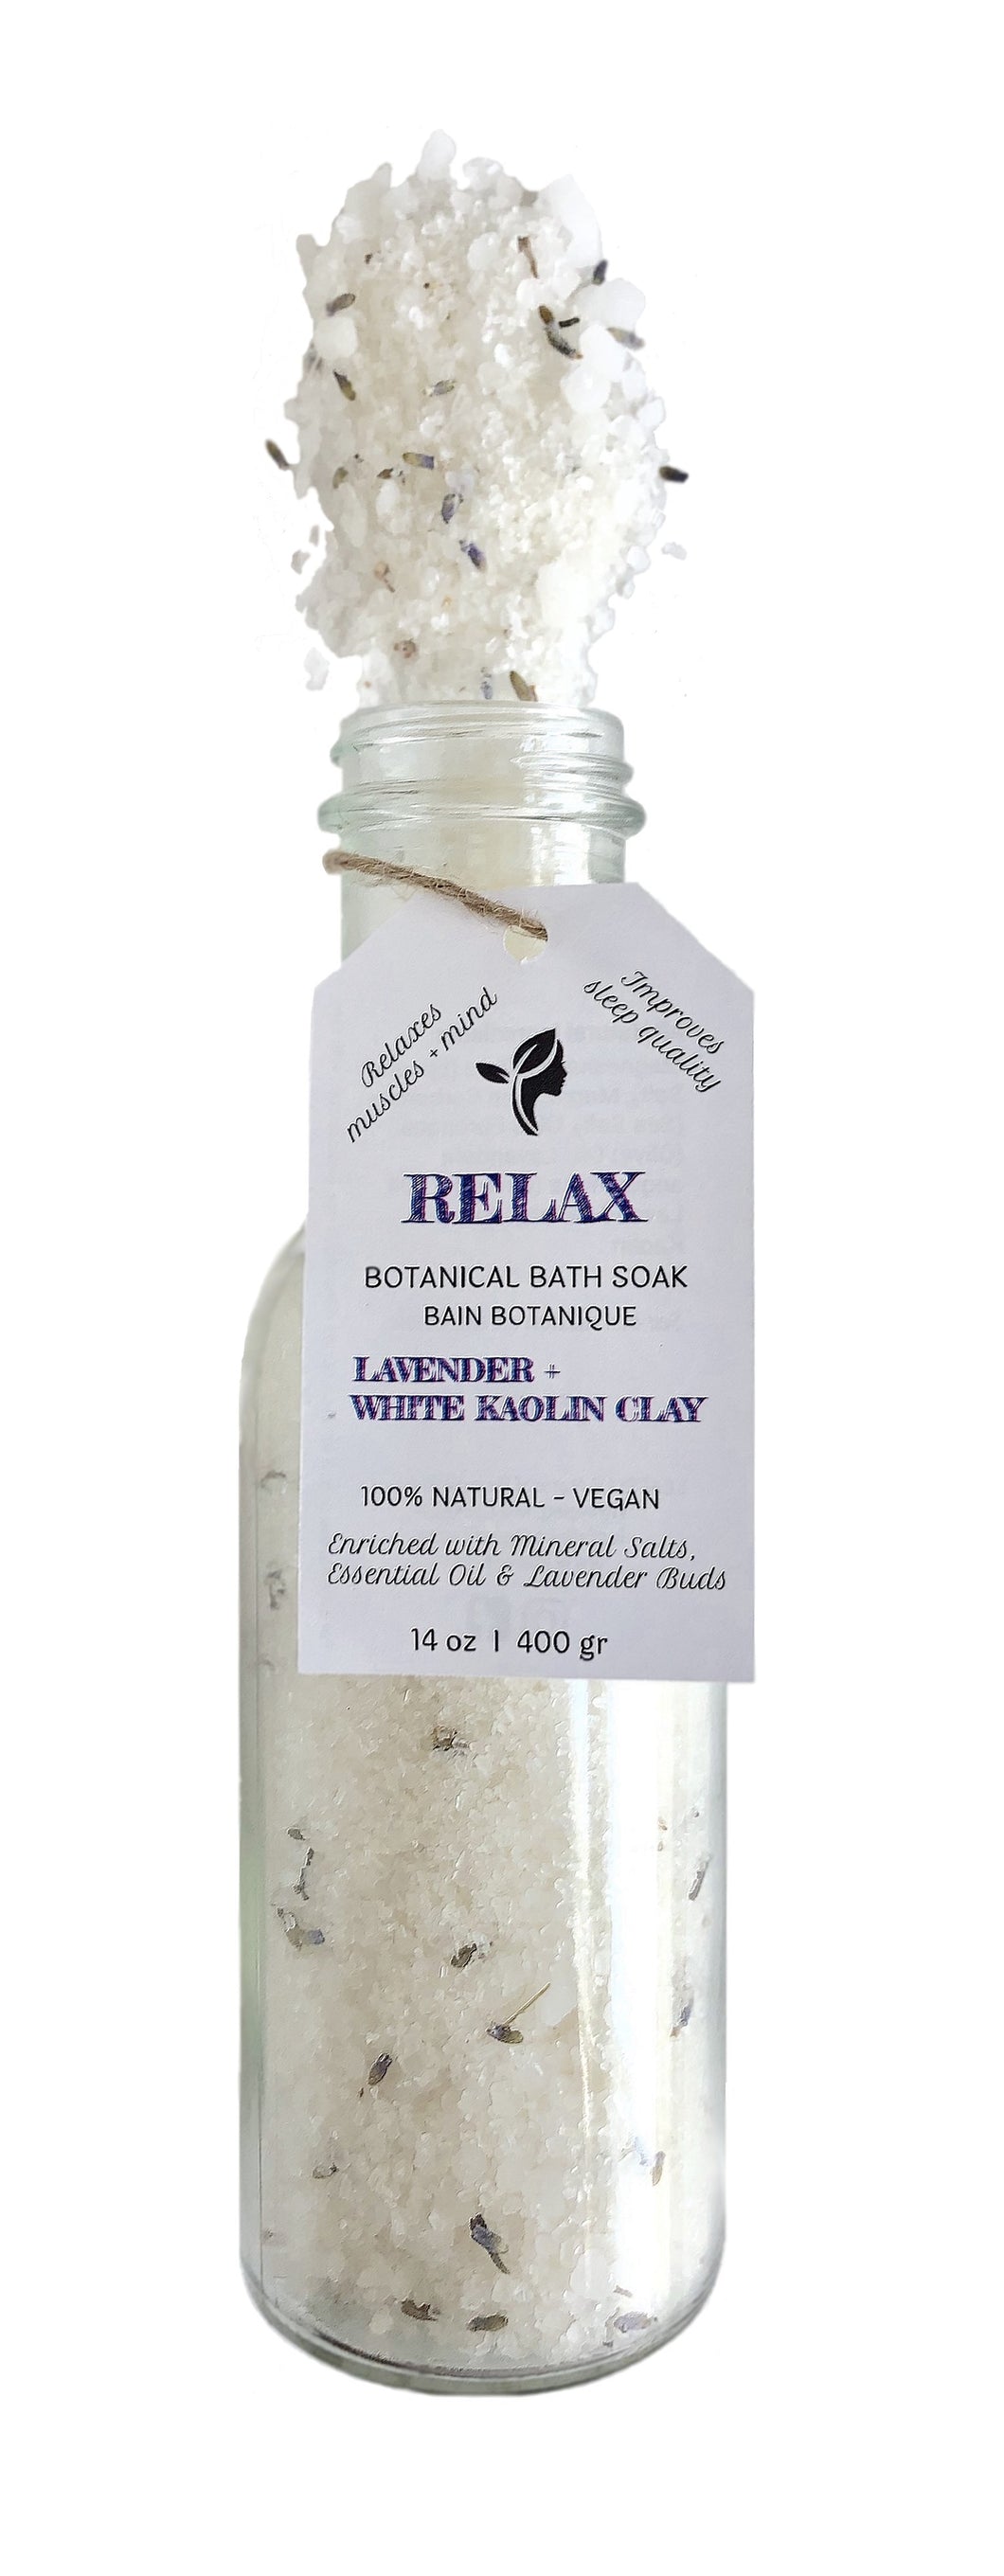 RELAX Botanical Bath Soak